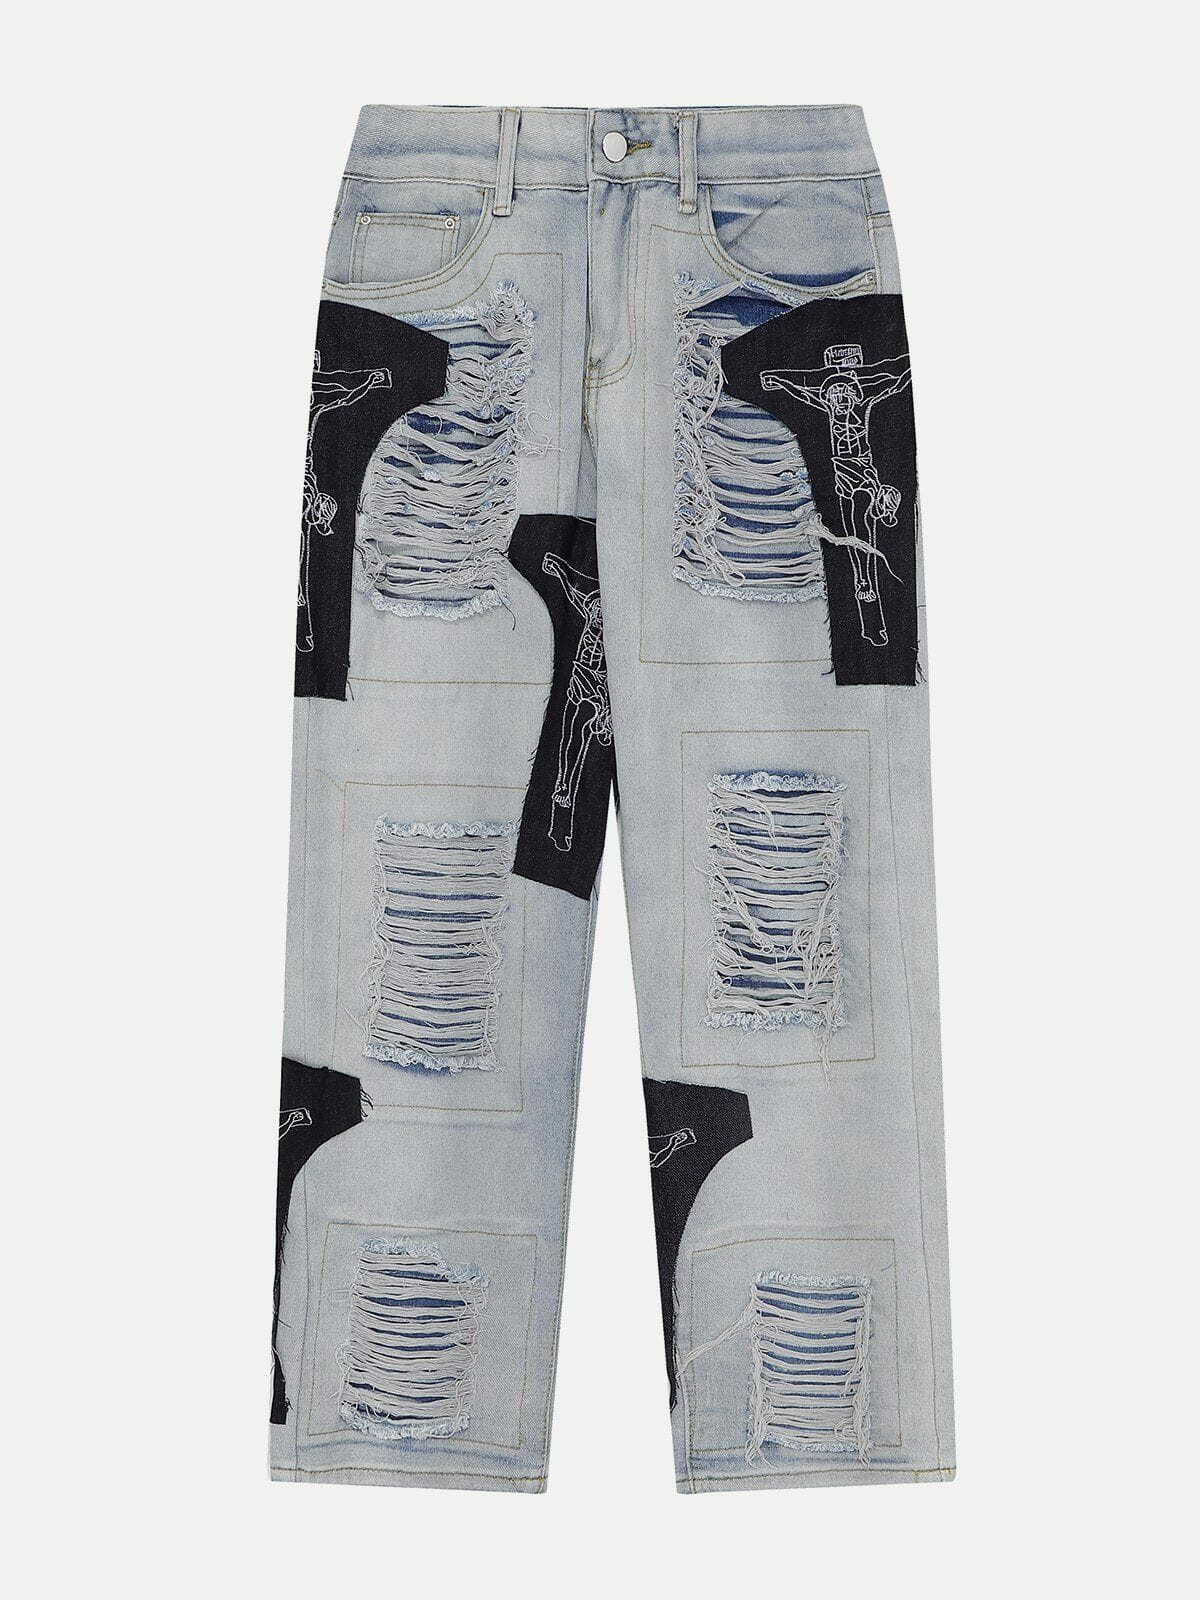 revolutionary patchwork jeans edgy & distinctive streetwear 3013